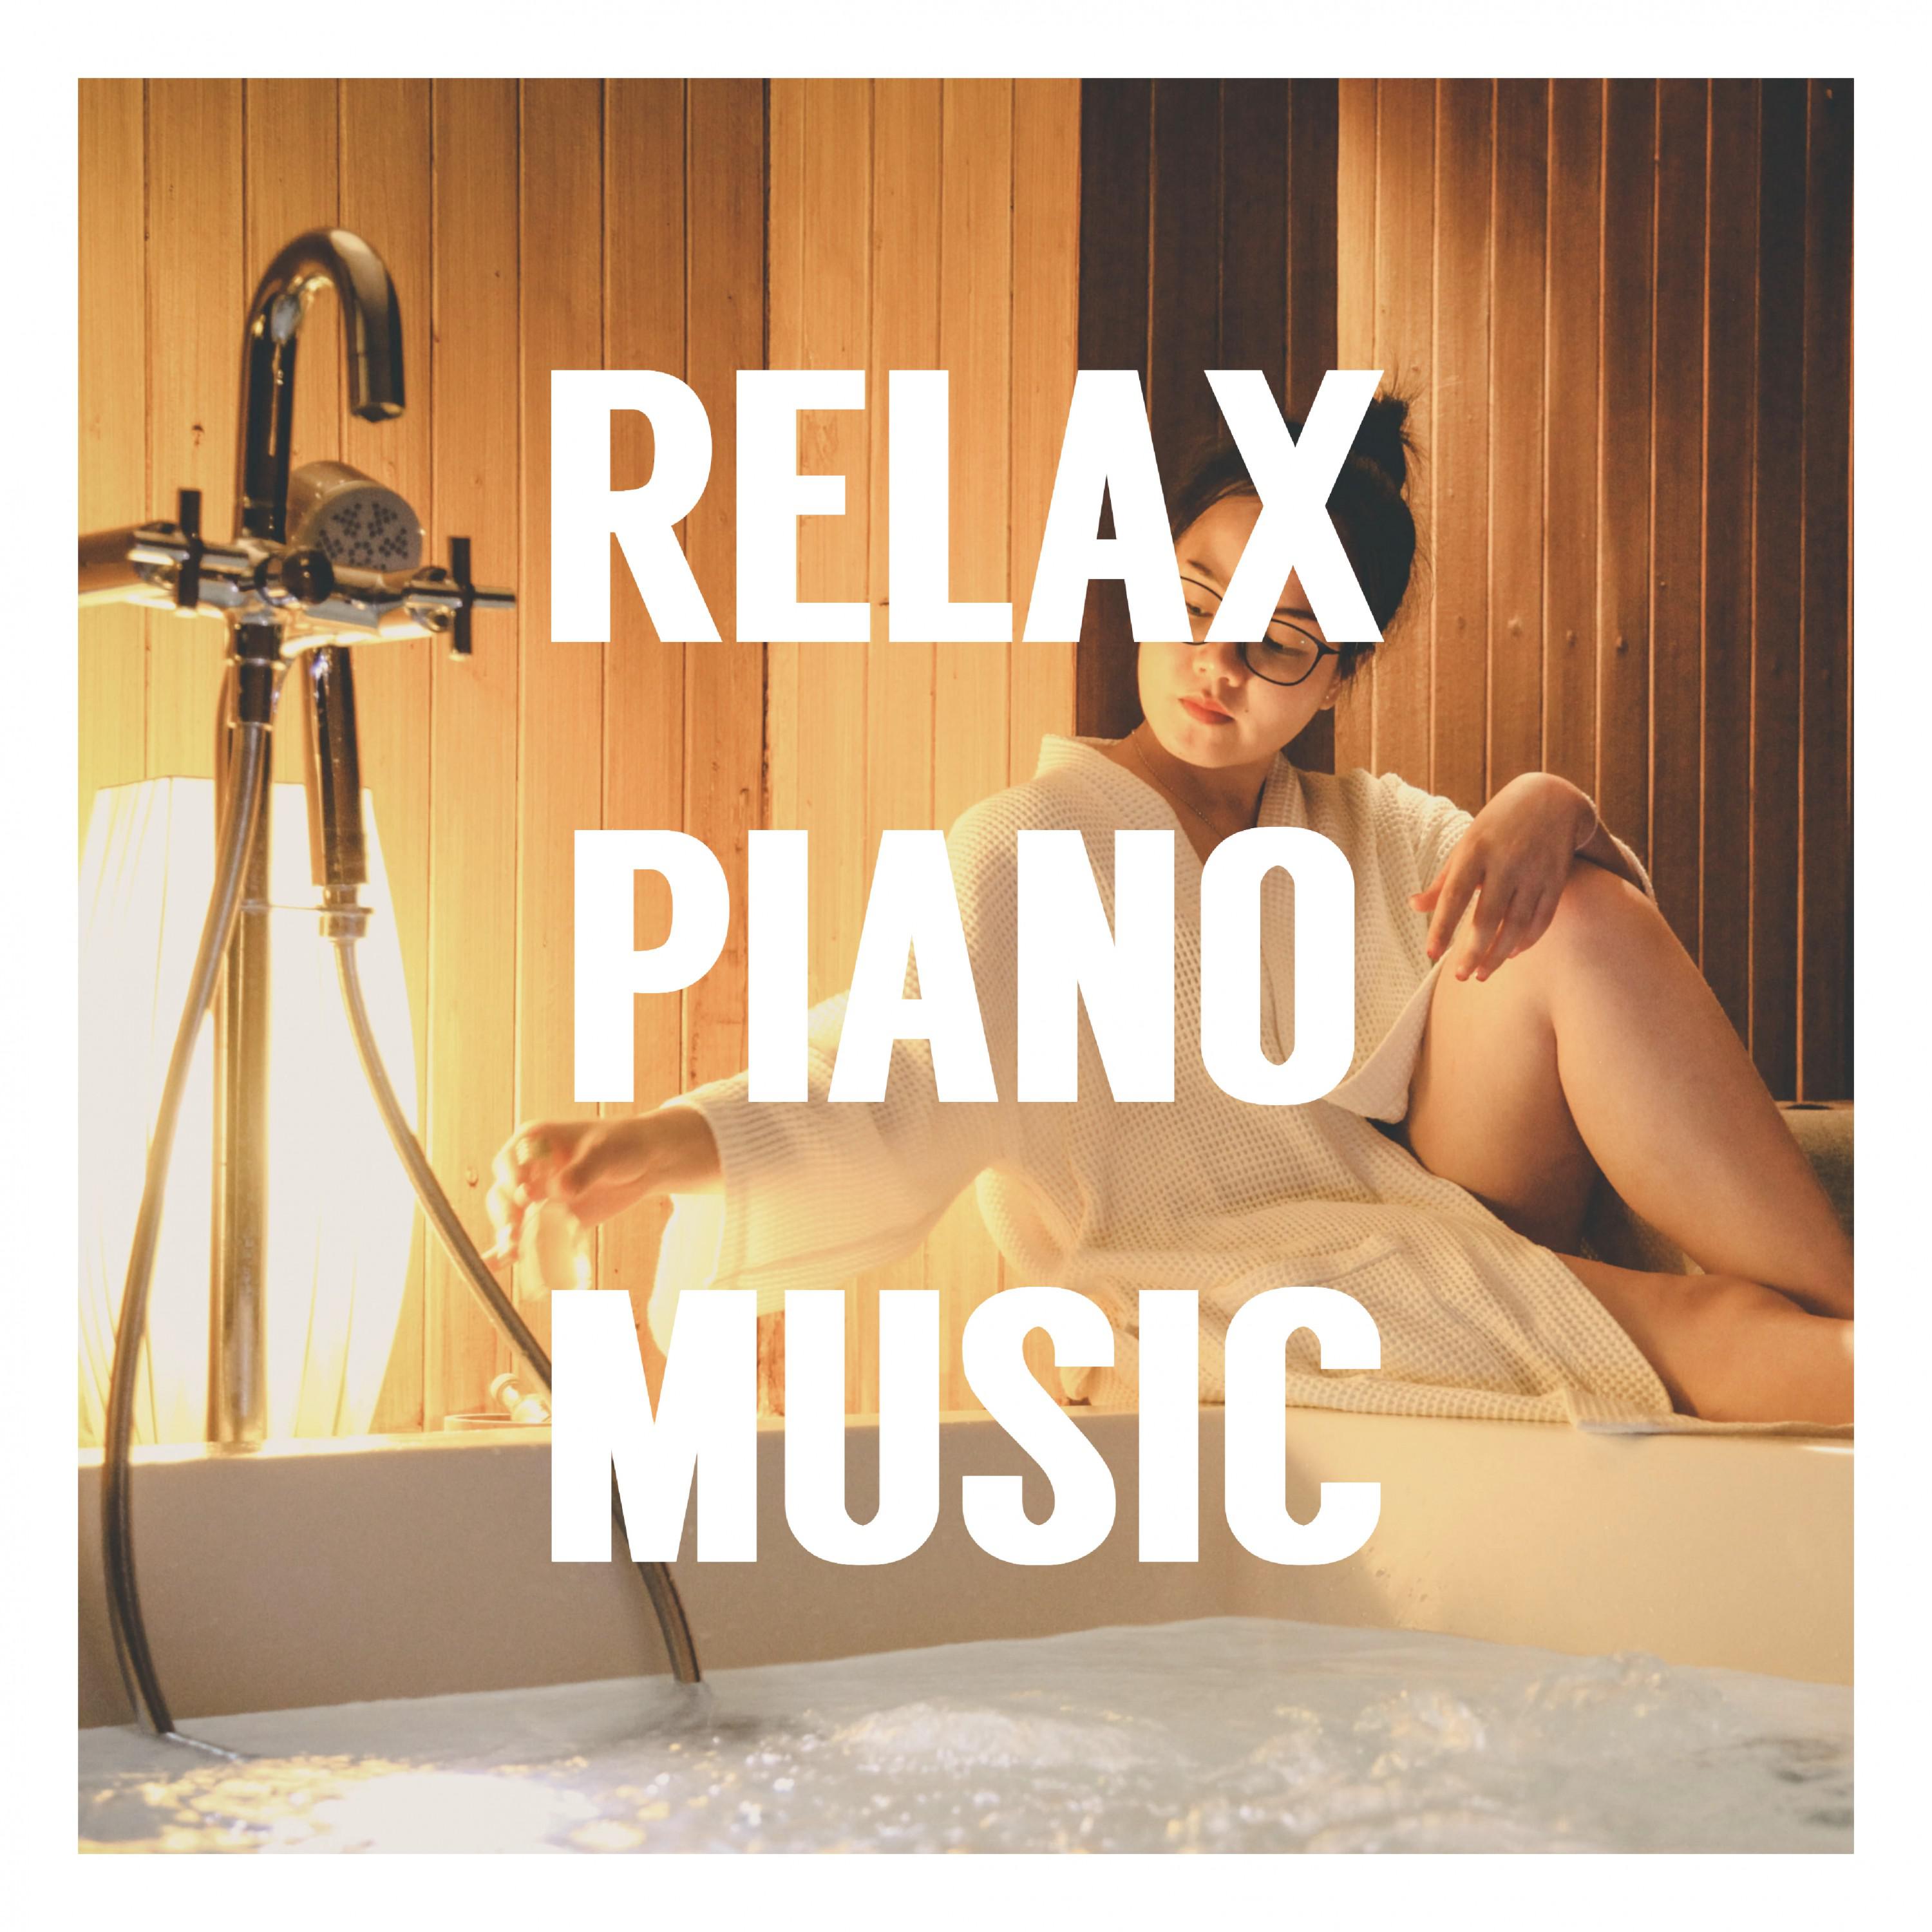 Relax Piano Music, Serenity, Harmony, Zen, Stress Relief, Chill Melody, Meditation